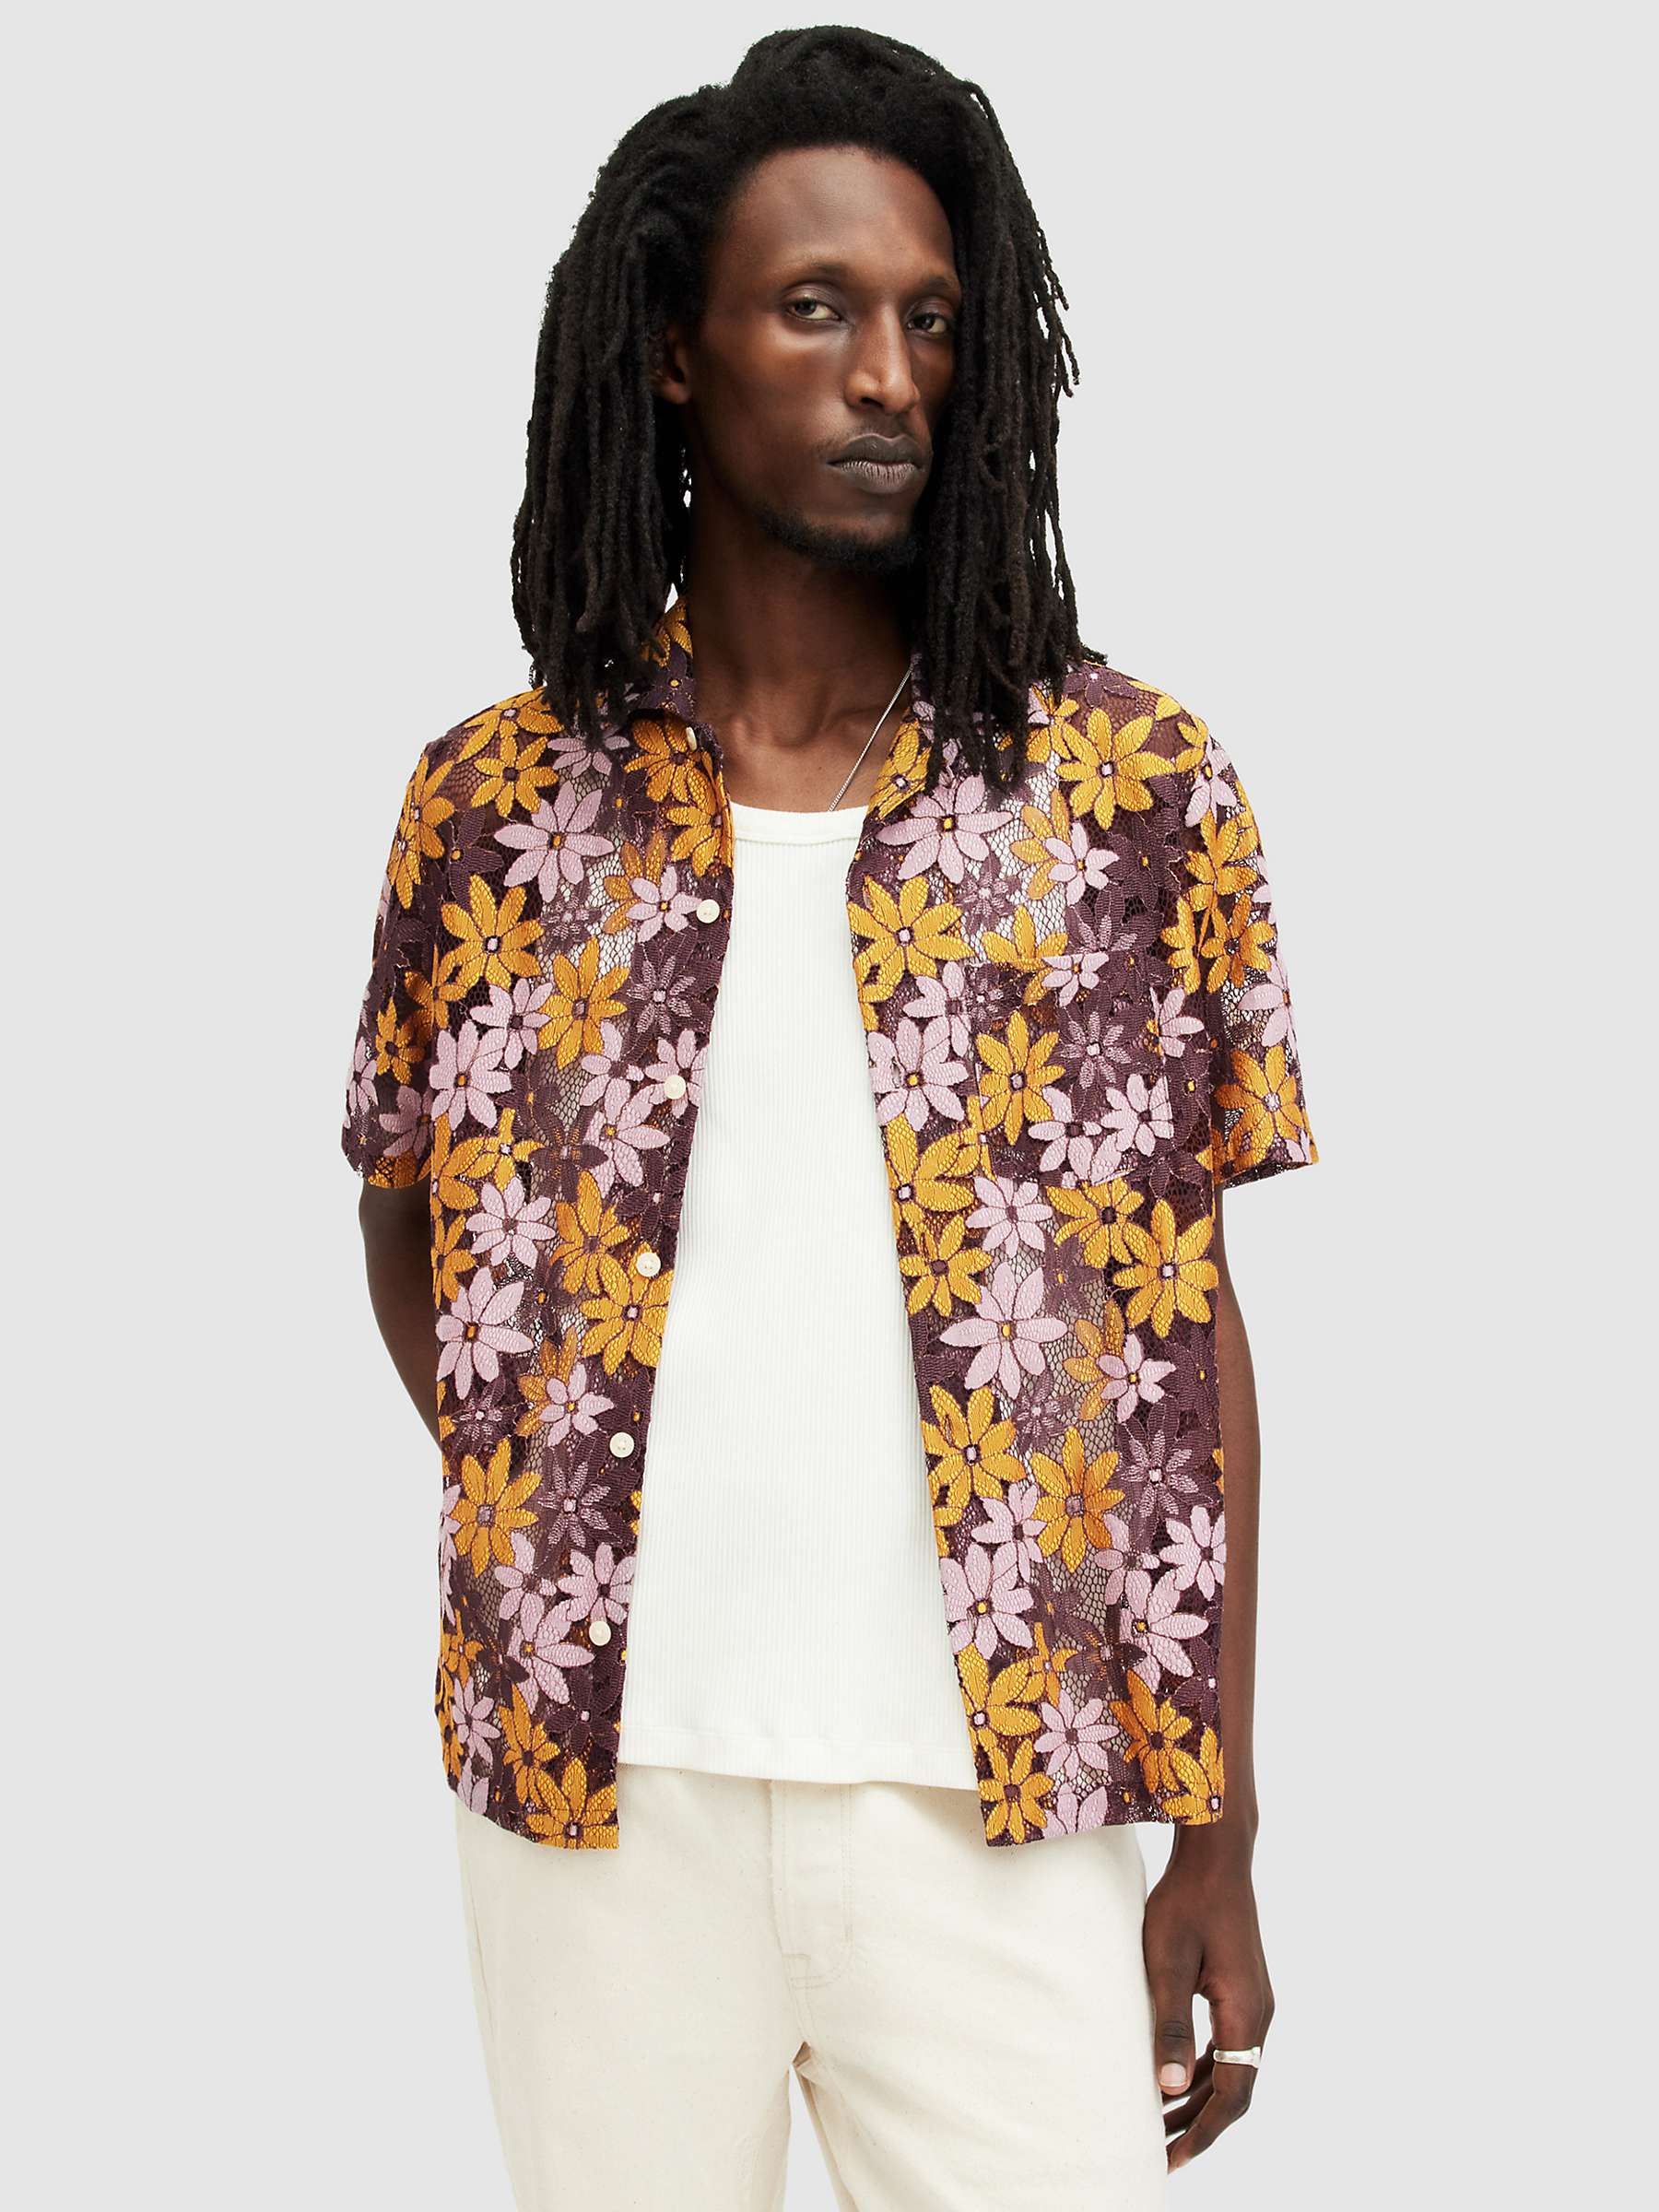 Buy AllSaints Visalia Short Sleeve Shirt, Purple/Multi Online at johnlewis.com